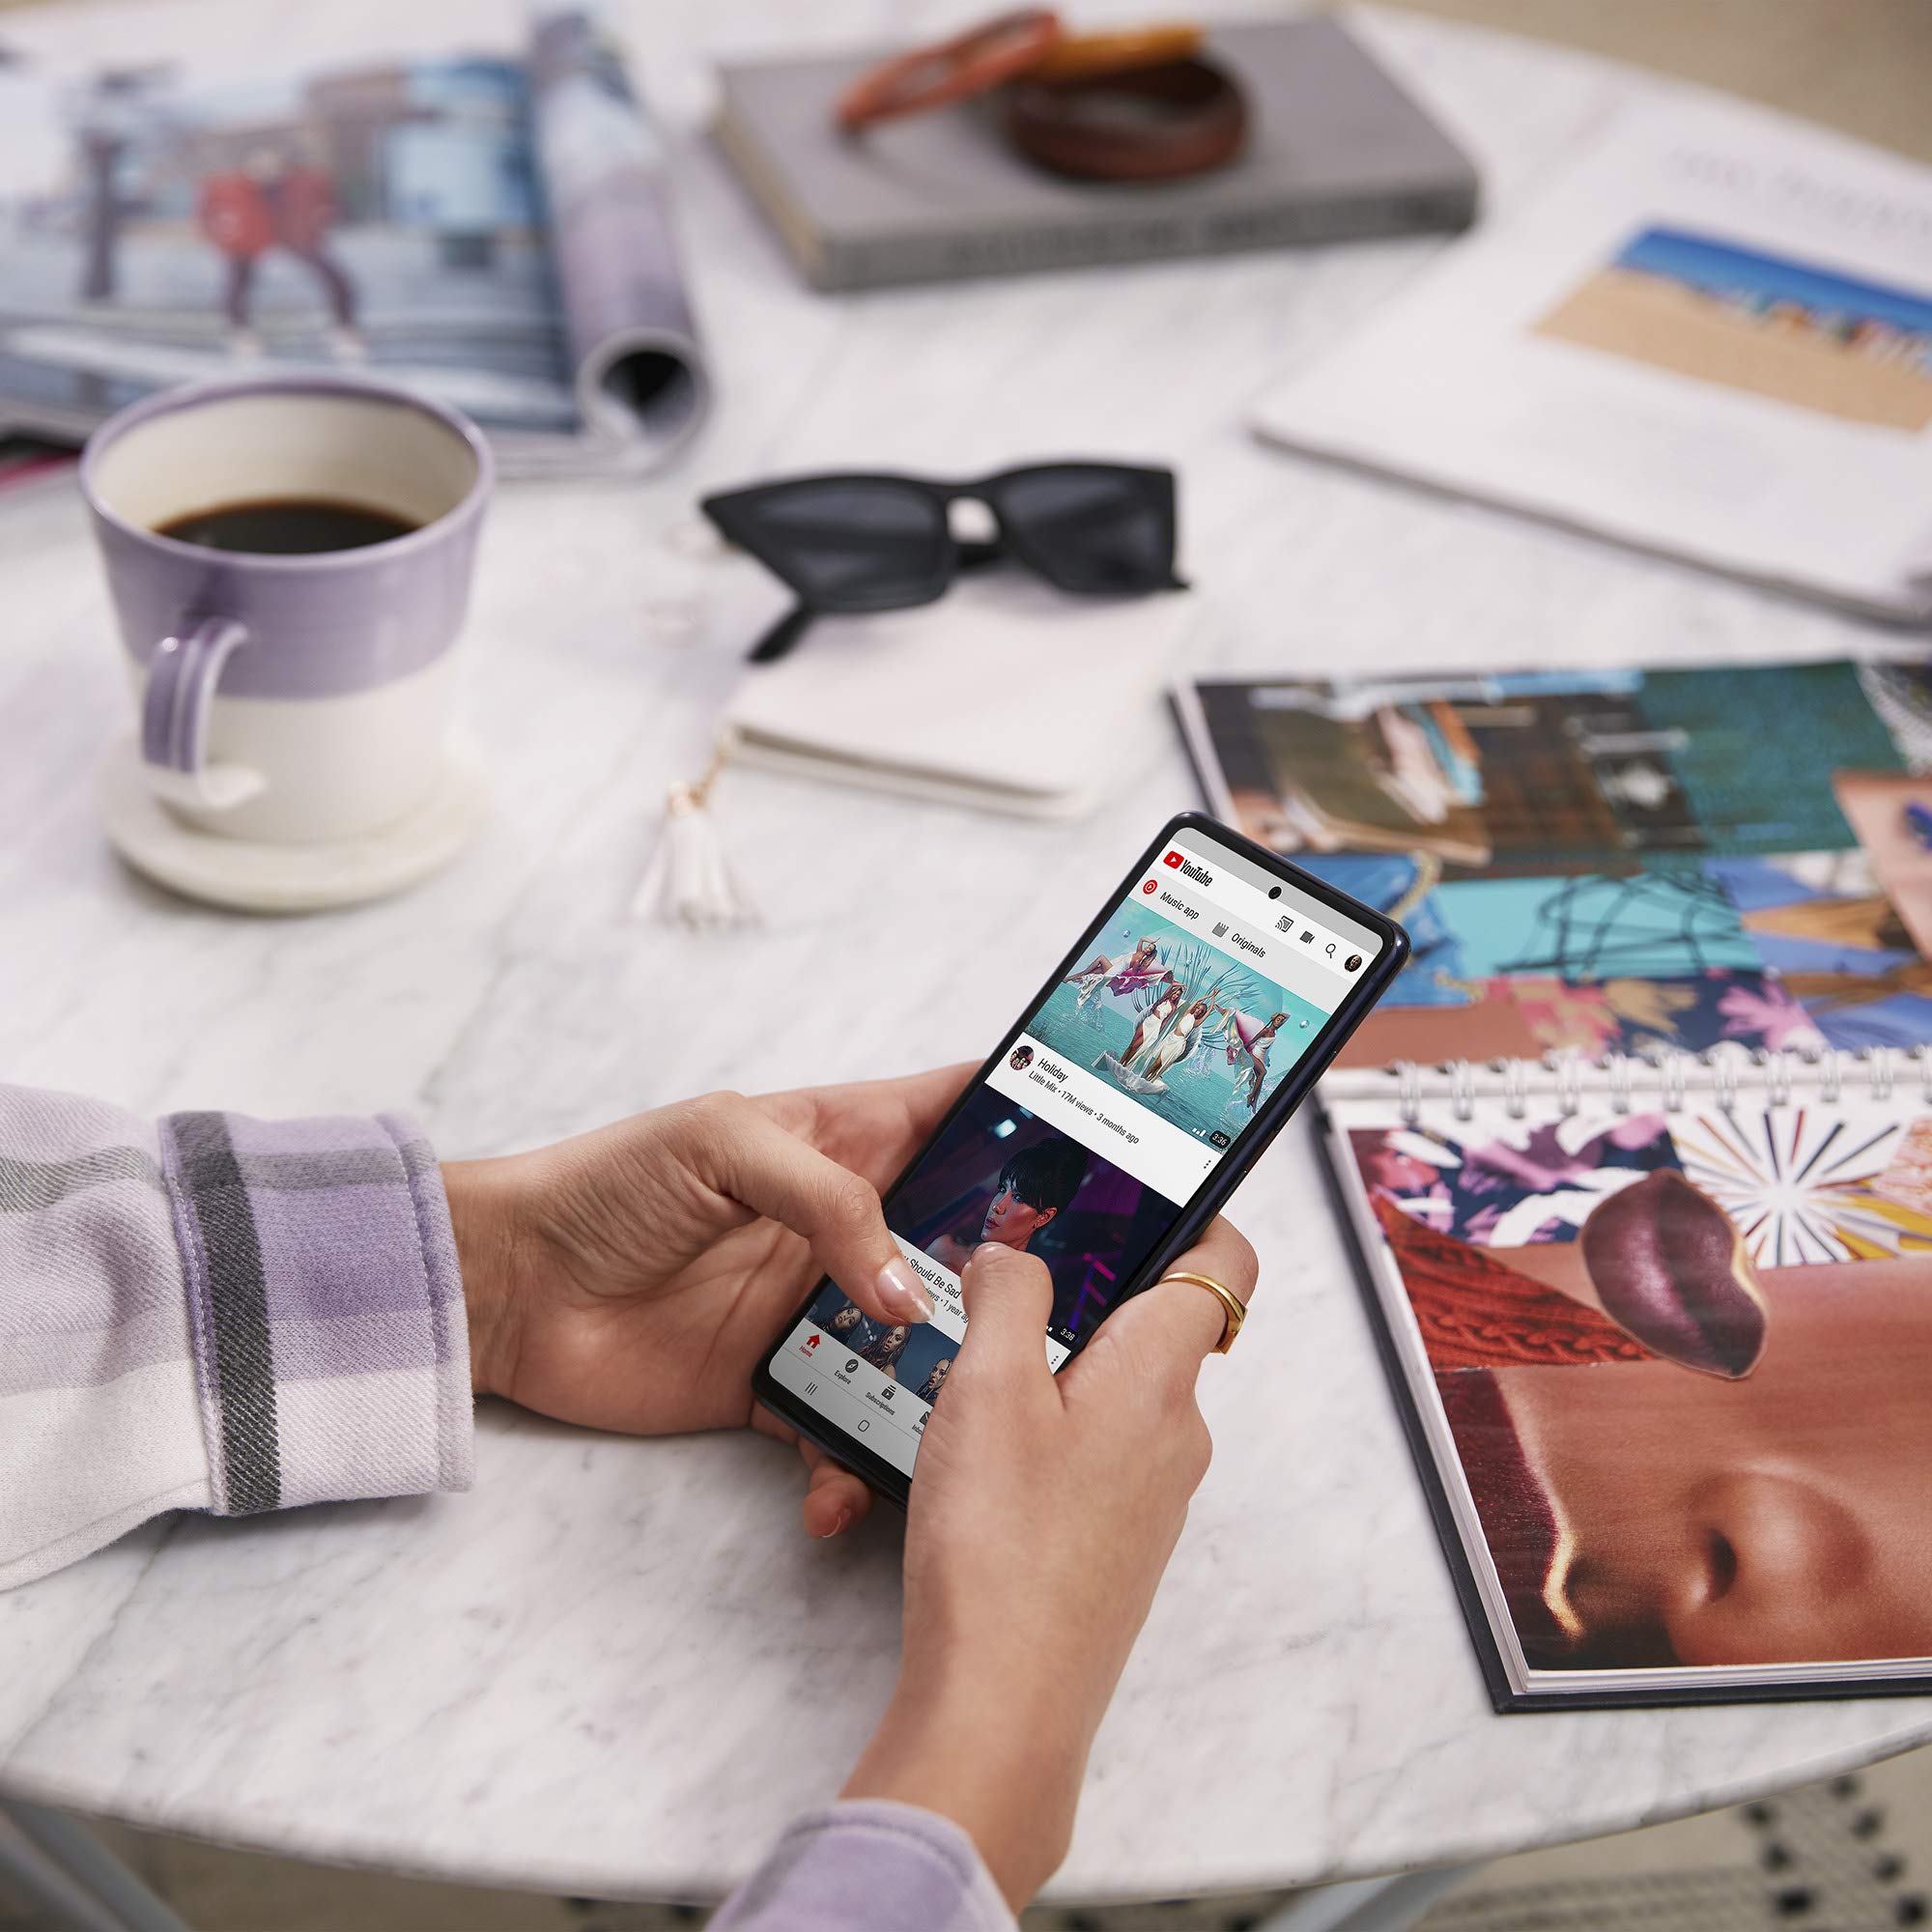 Samsung Galaxy S20 FE Mobile Phone; Sim Free Smartphone - 128 GB - Cloud Lavender (UK Version)